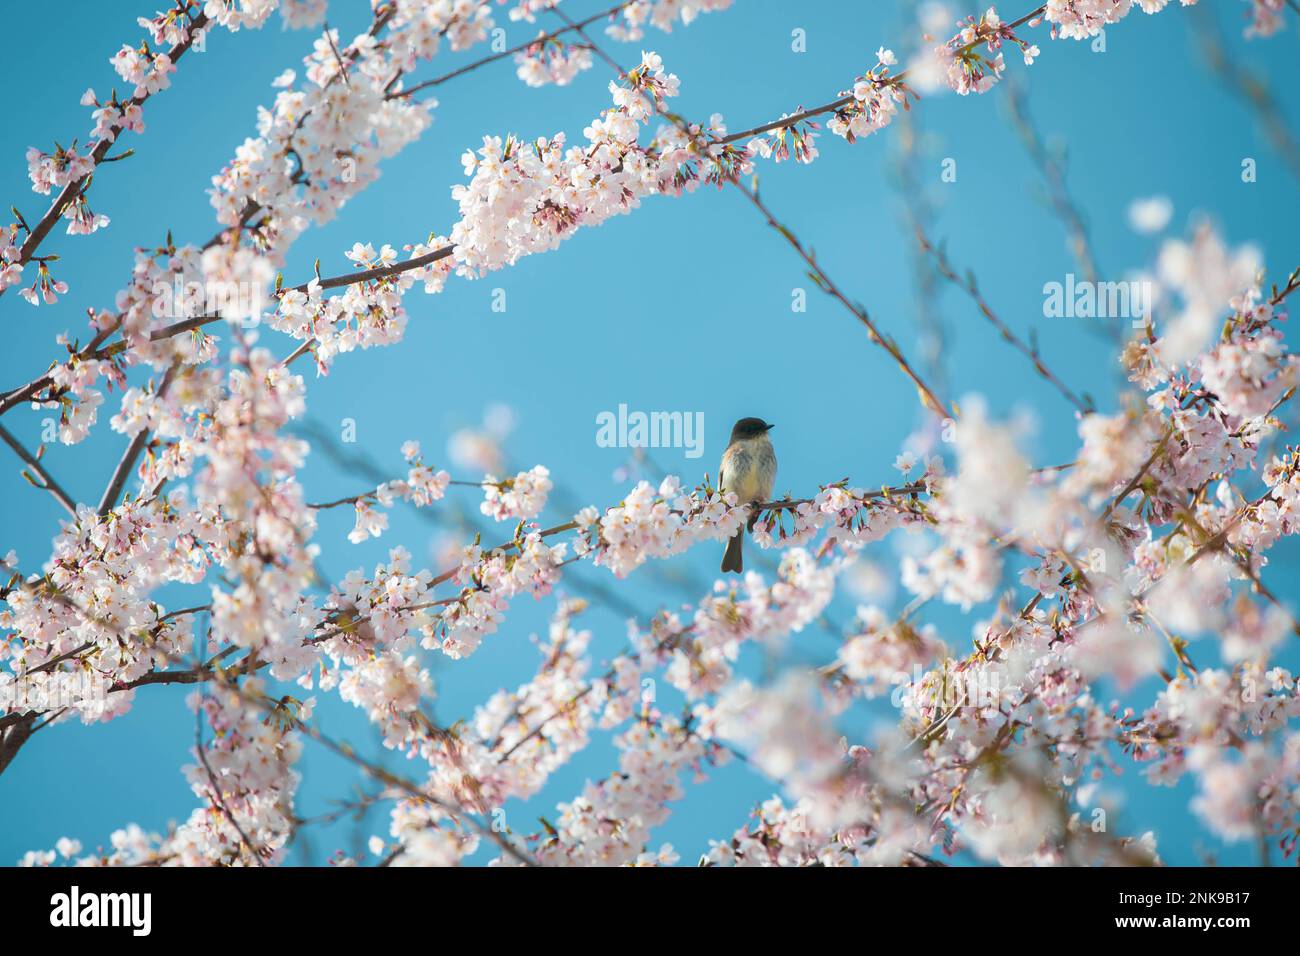 Eastern Phoebe bird in a flowering cherry tree Stock Photo